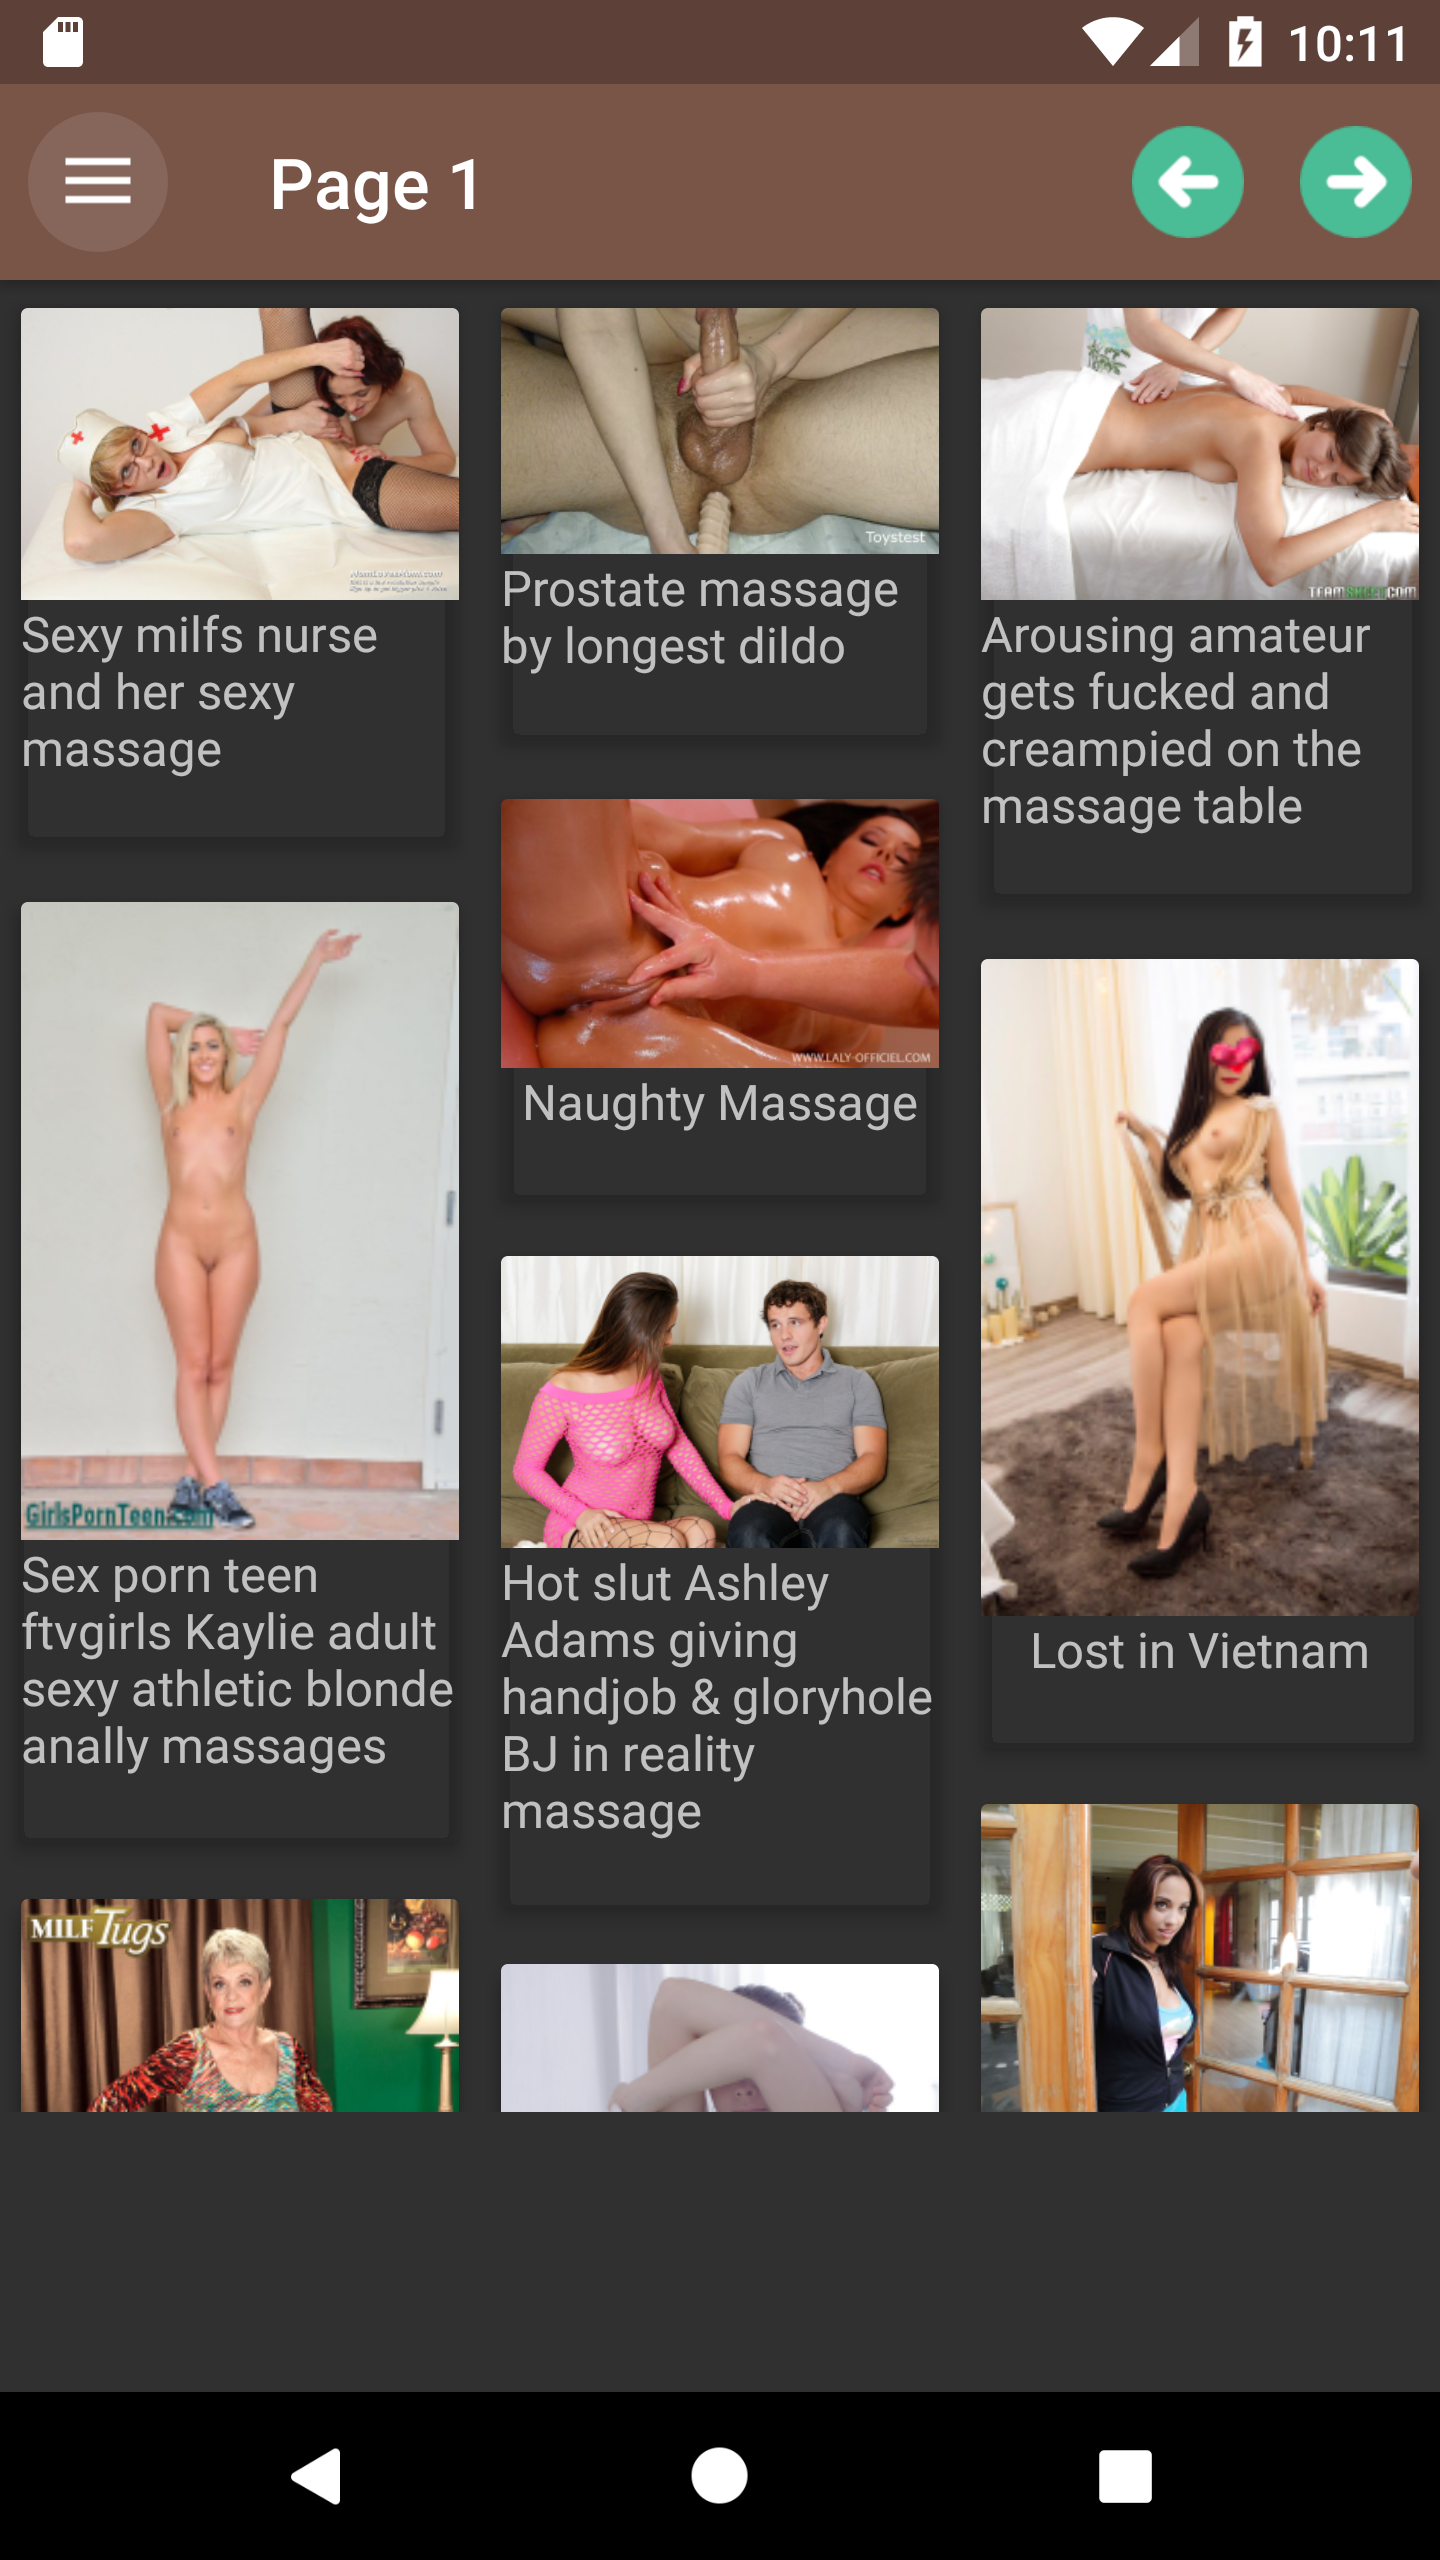 Massage Porn pics,how,porn,henati,collection,adult,hot,shrinking,wallpaper,apk,offline,app,hentai,comics,sexy,apps,manga,dreams,image,galleries,picx,pornstars,gallery,download